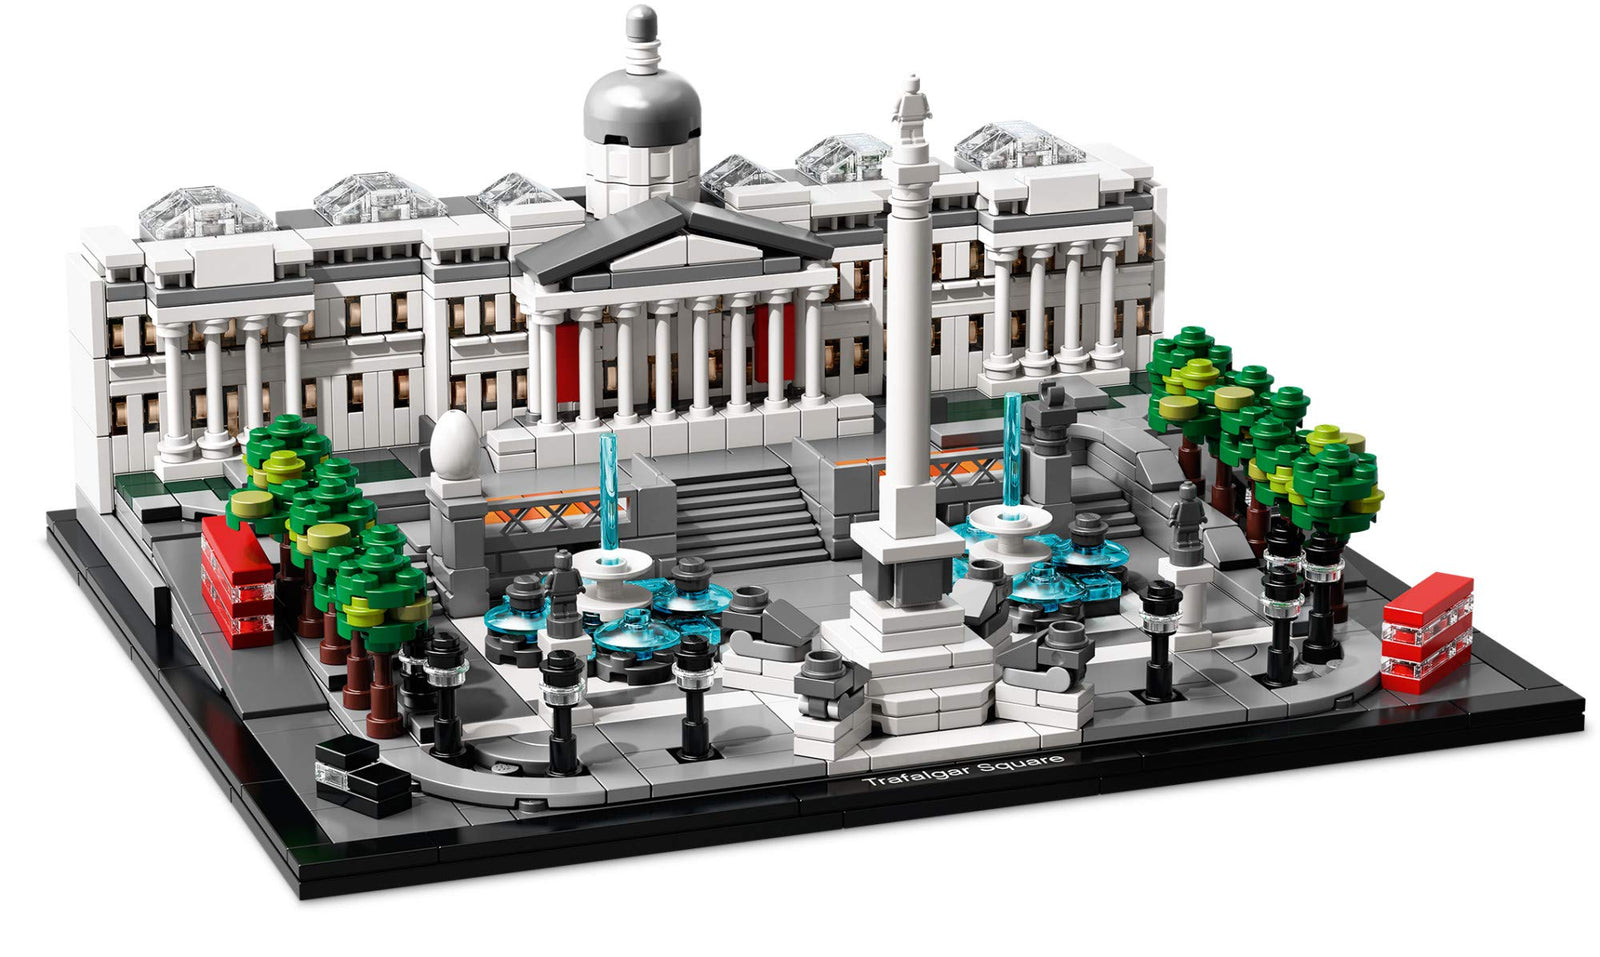 LEGO Architecture 21045 Trafalgar Square Building Kit (1197 Pieces)